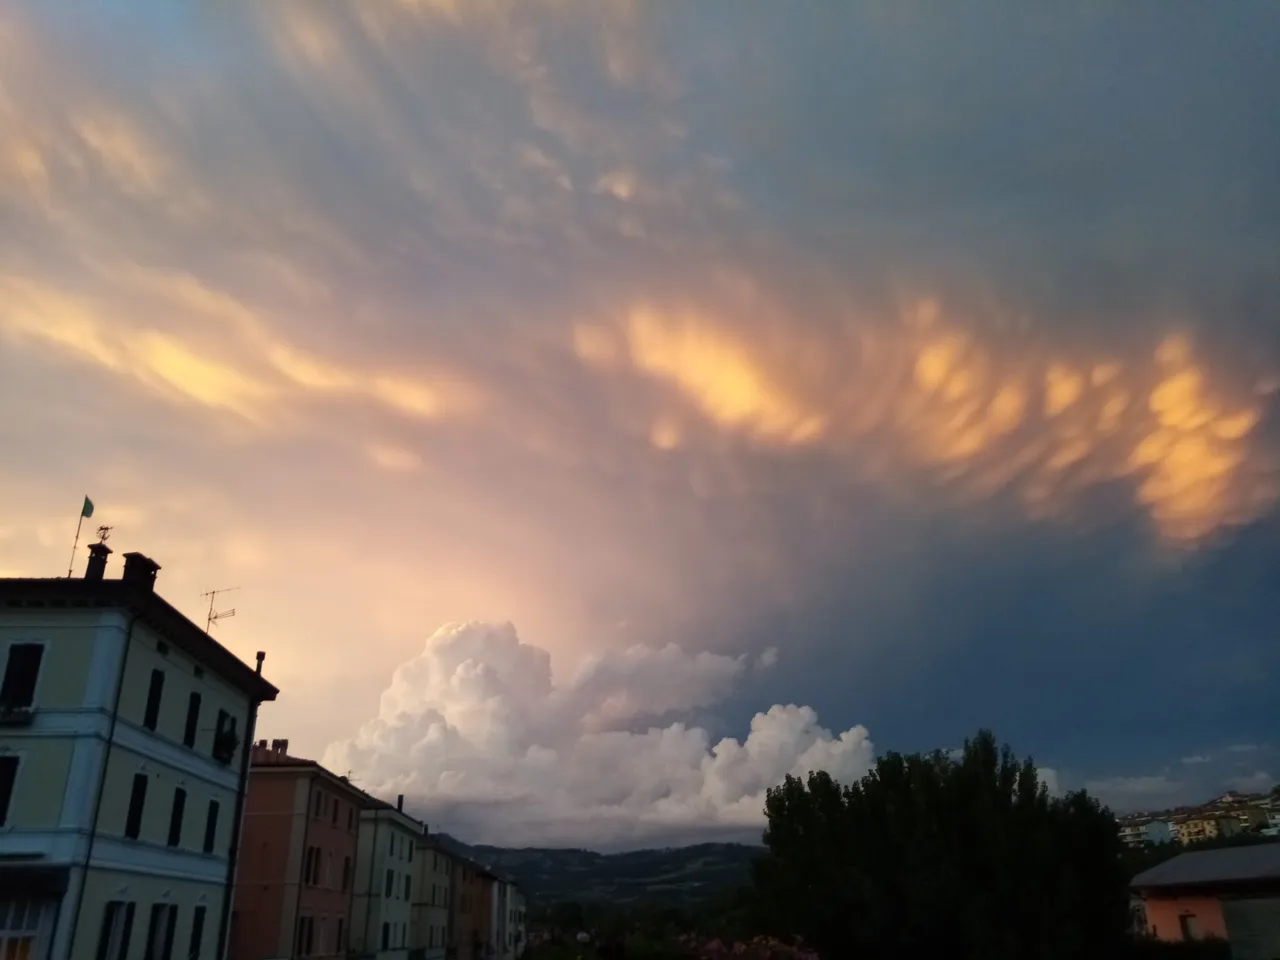 A storm on Porretta Terme